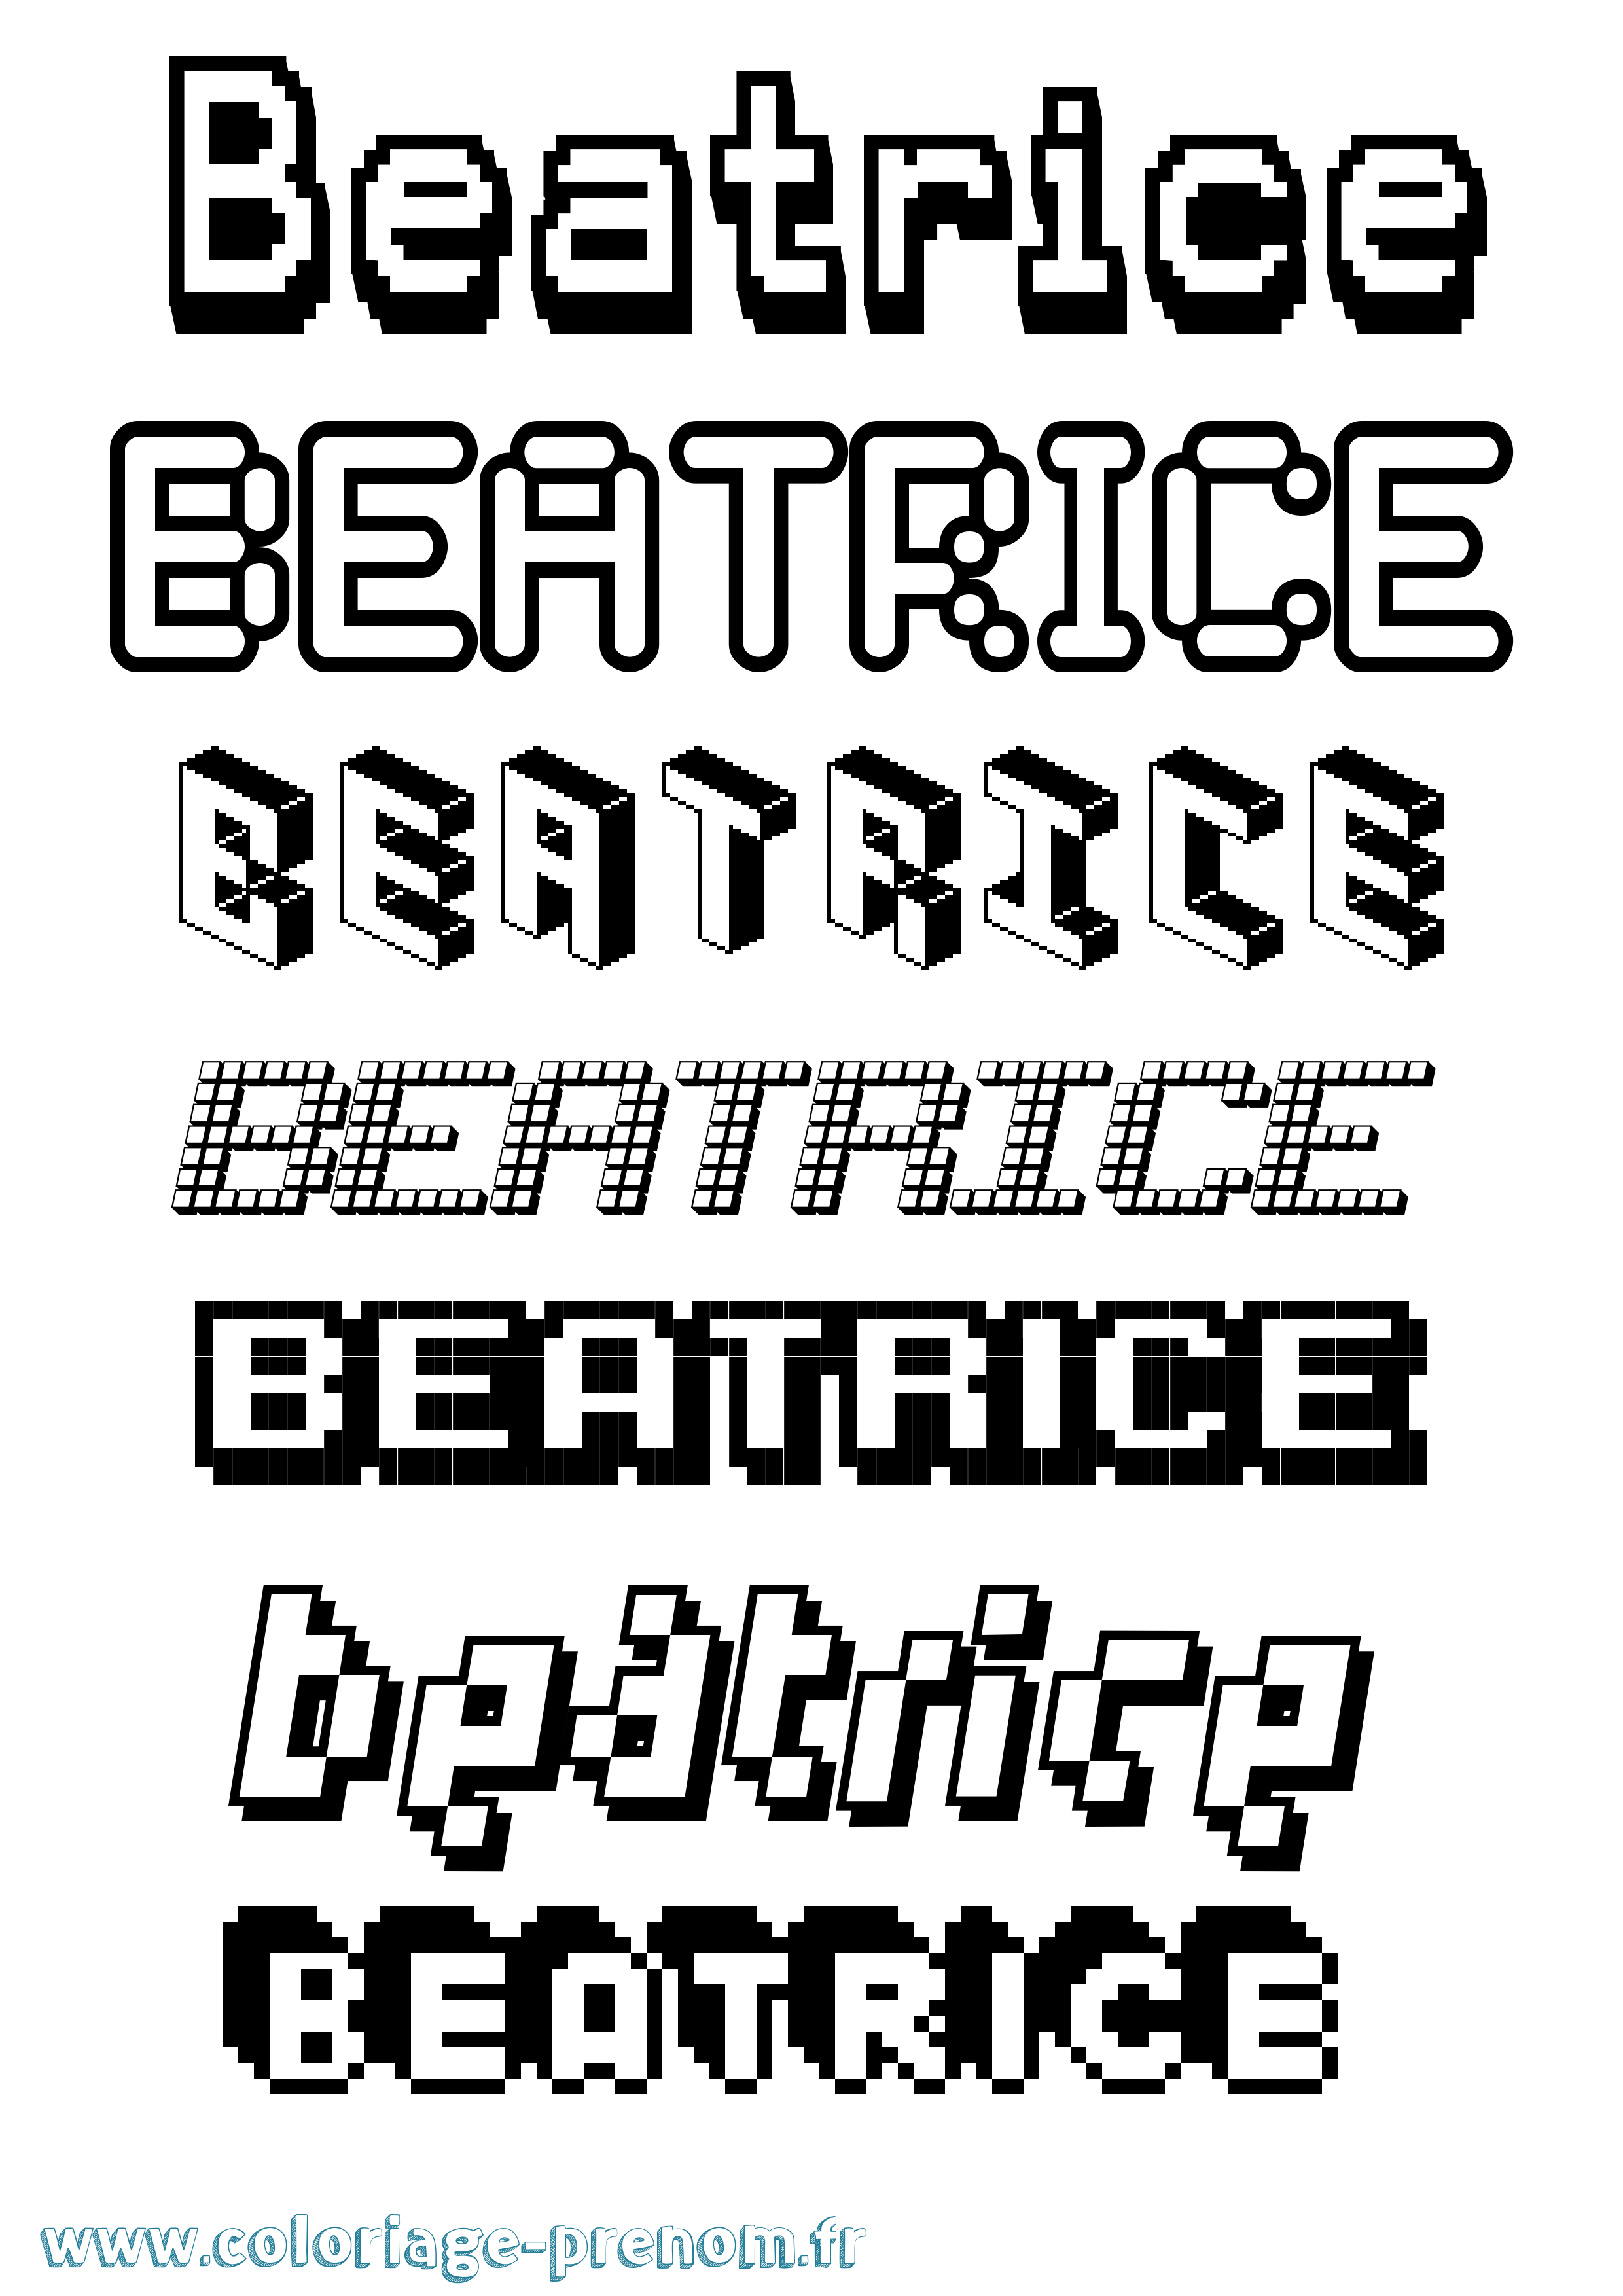 Coloriage prénom Beatrice Pixel